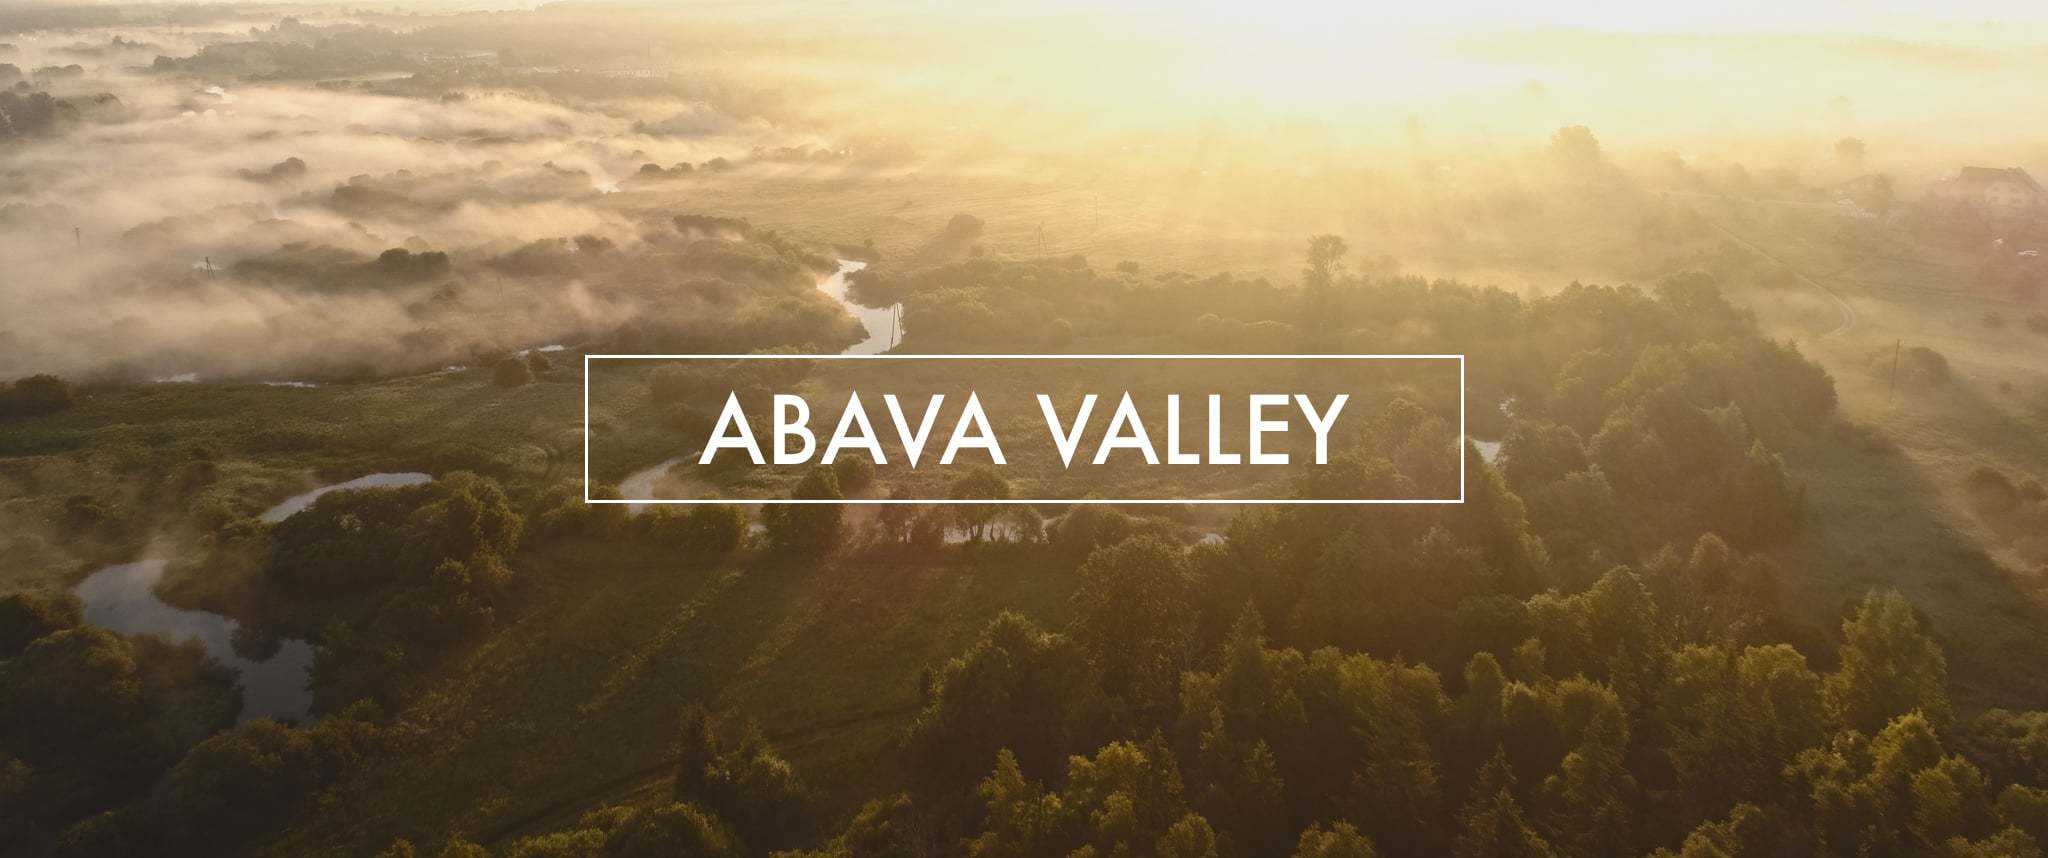 Abava Valley: Drone Vedio